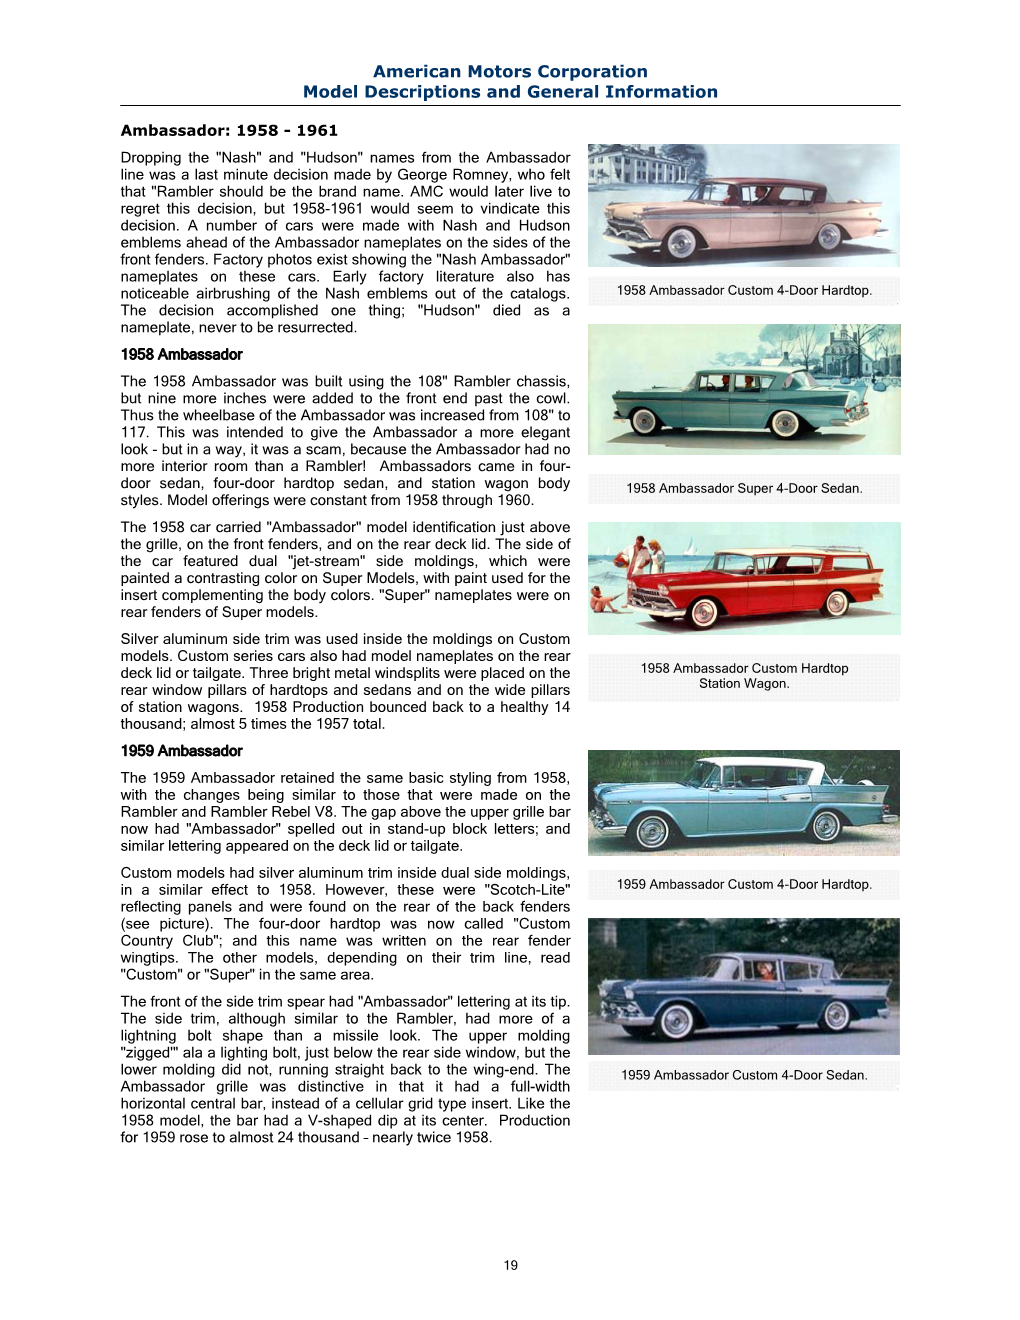 American Motors Corporation Model Descriptions and General Information